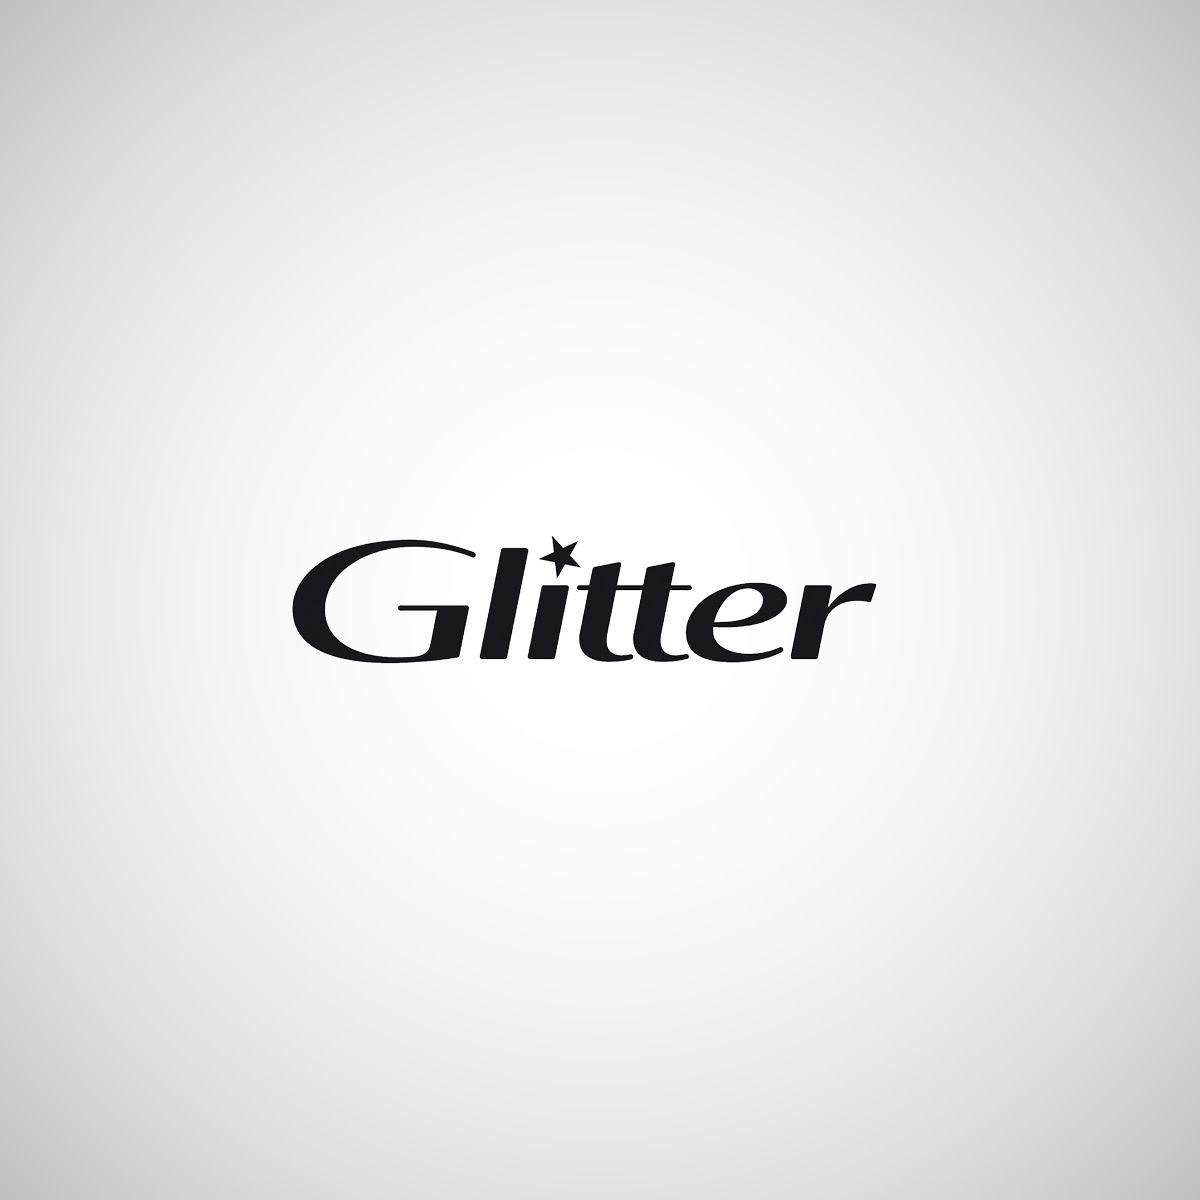 Glitter_1200x1200.jpg